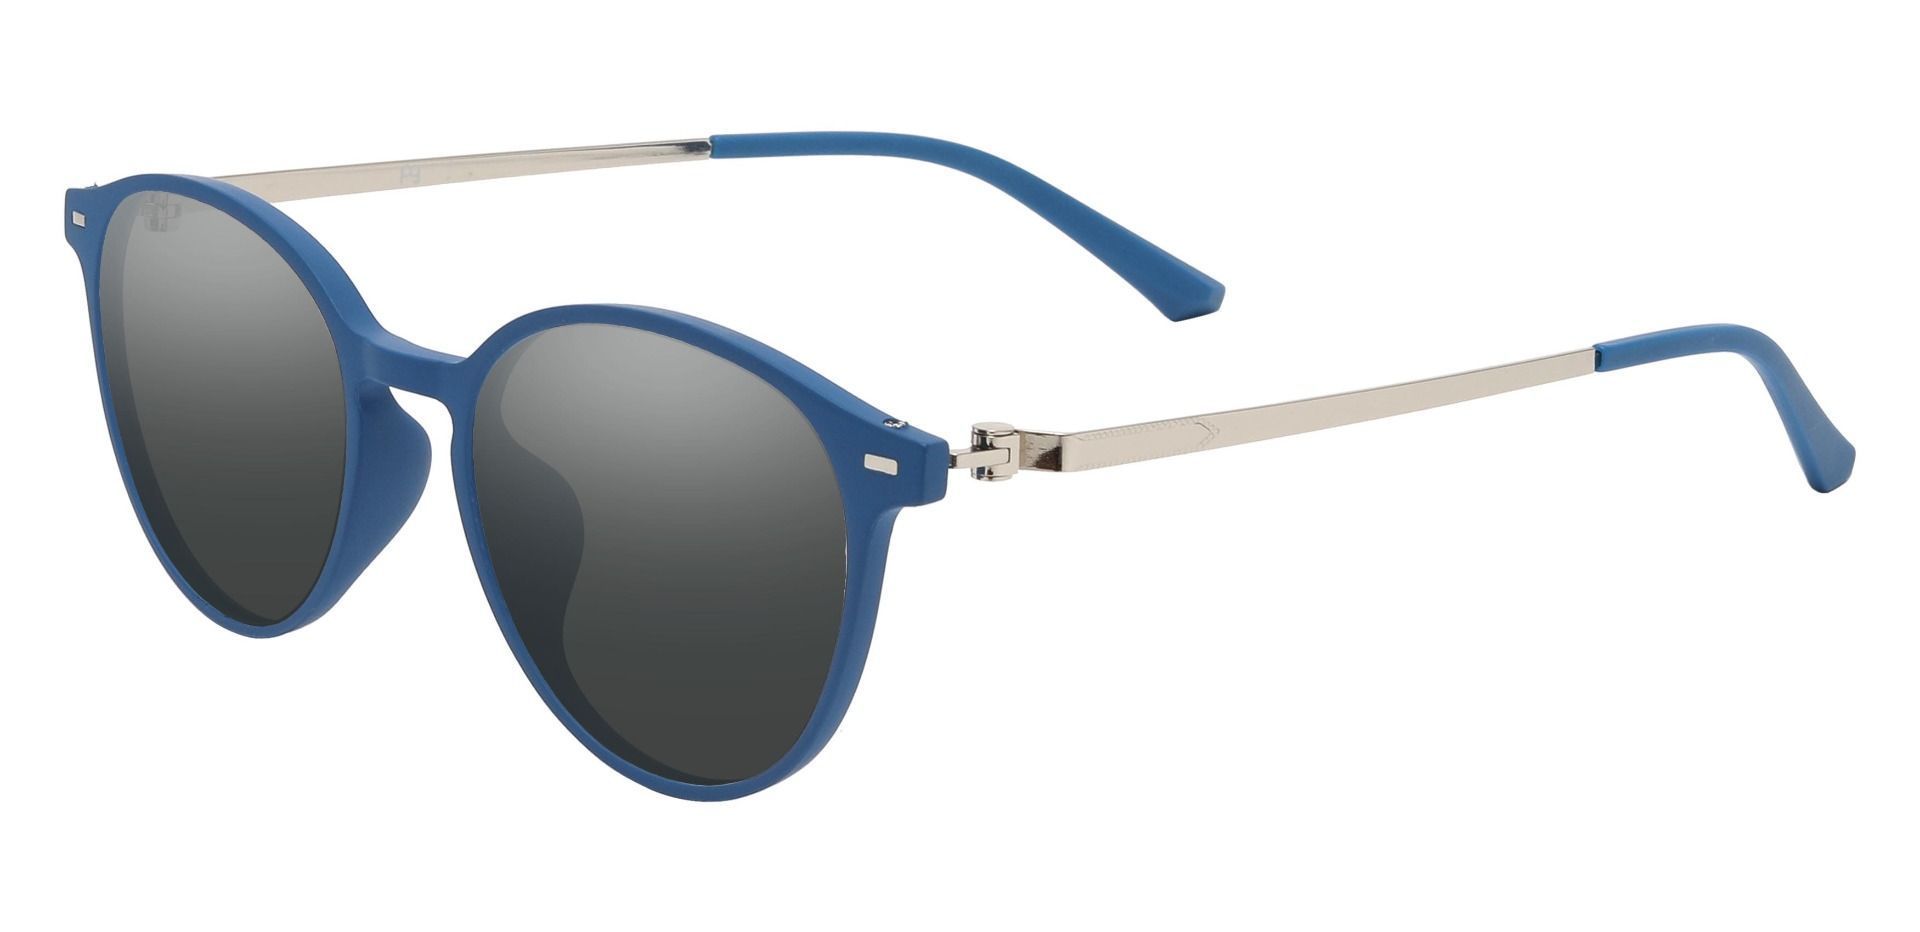 Springer Round Lined Bifocal Sunglasses - Blue Frame With Gray Lenses